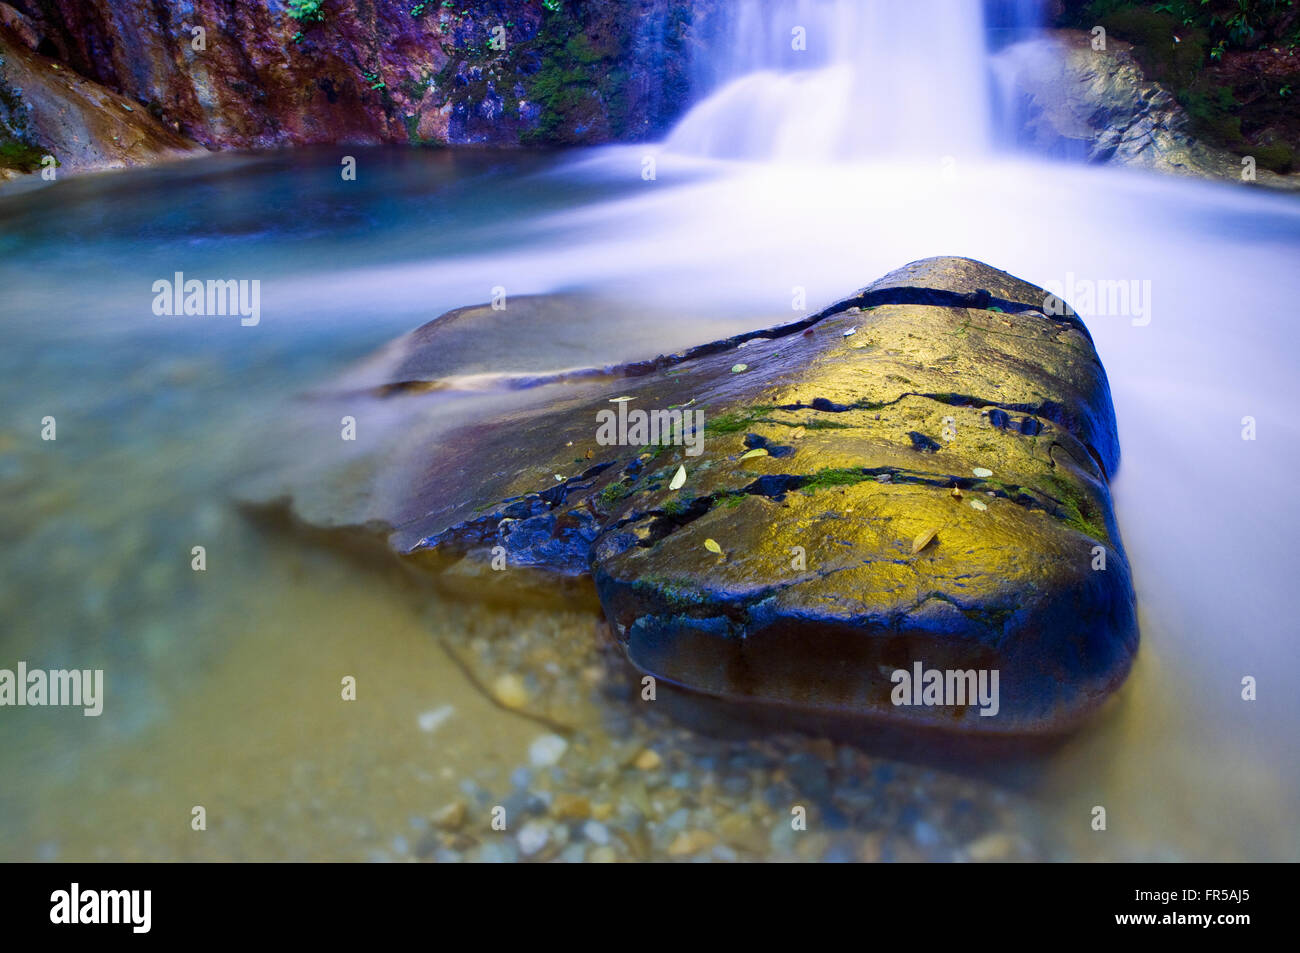 A landscape image of a single large rock in a pool below a waterfall. Image taken in a virgin forest in Gunma, Japan Stock Photo